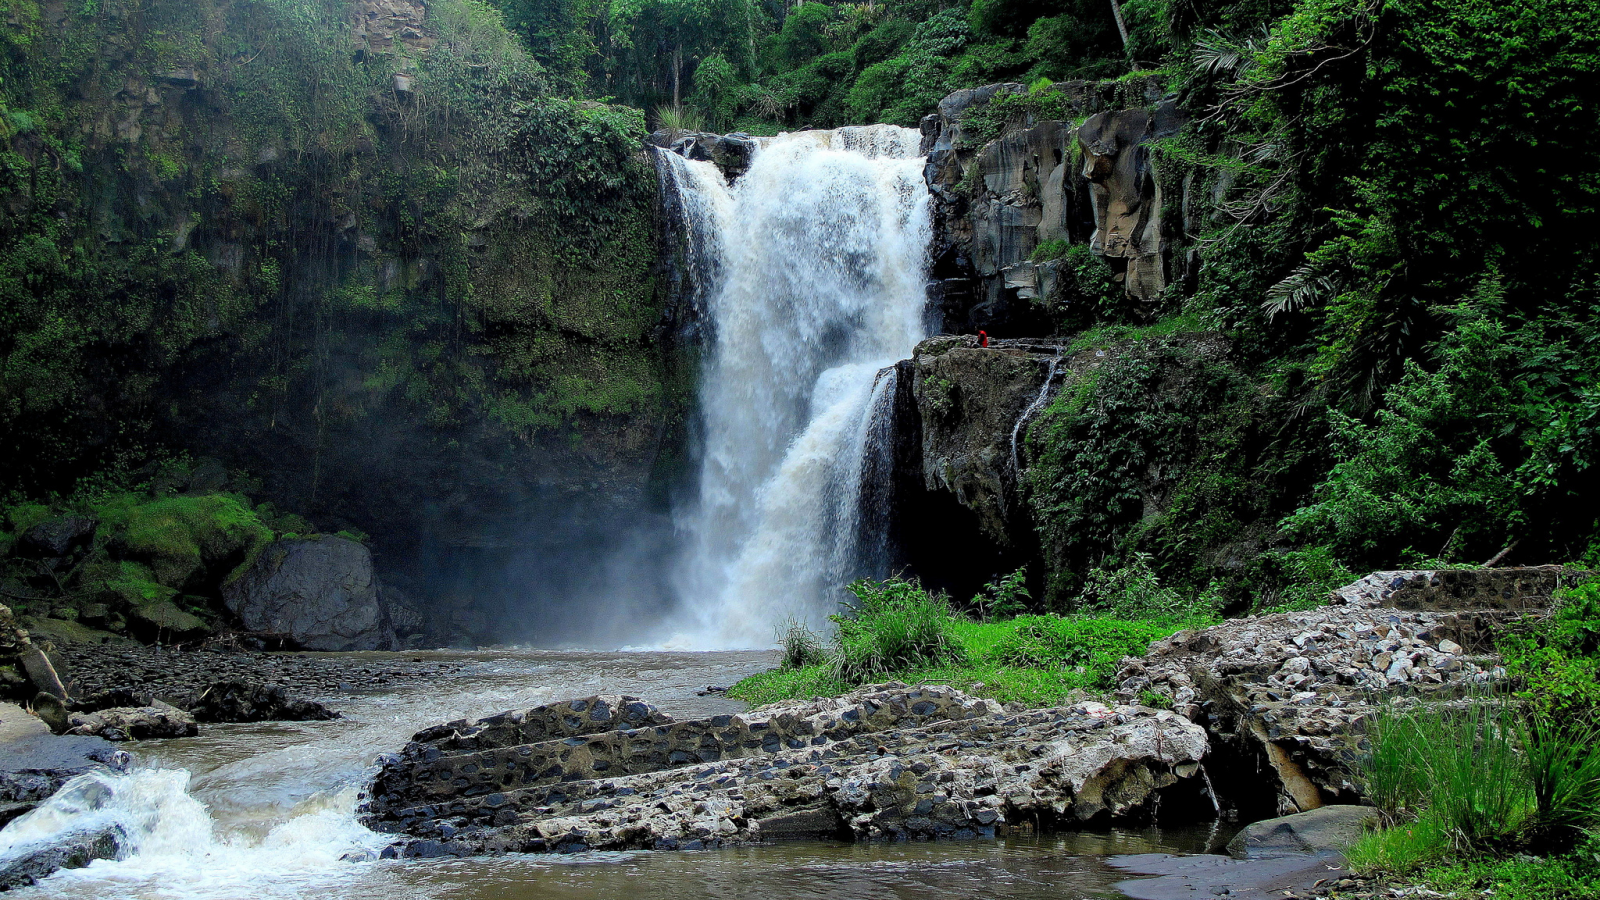 tegenungan waterfall, indonesia, скалы, индонезия, водопад, бали, bali